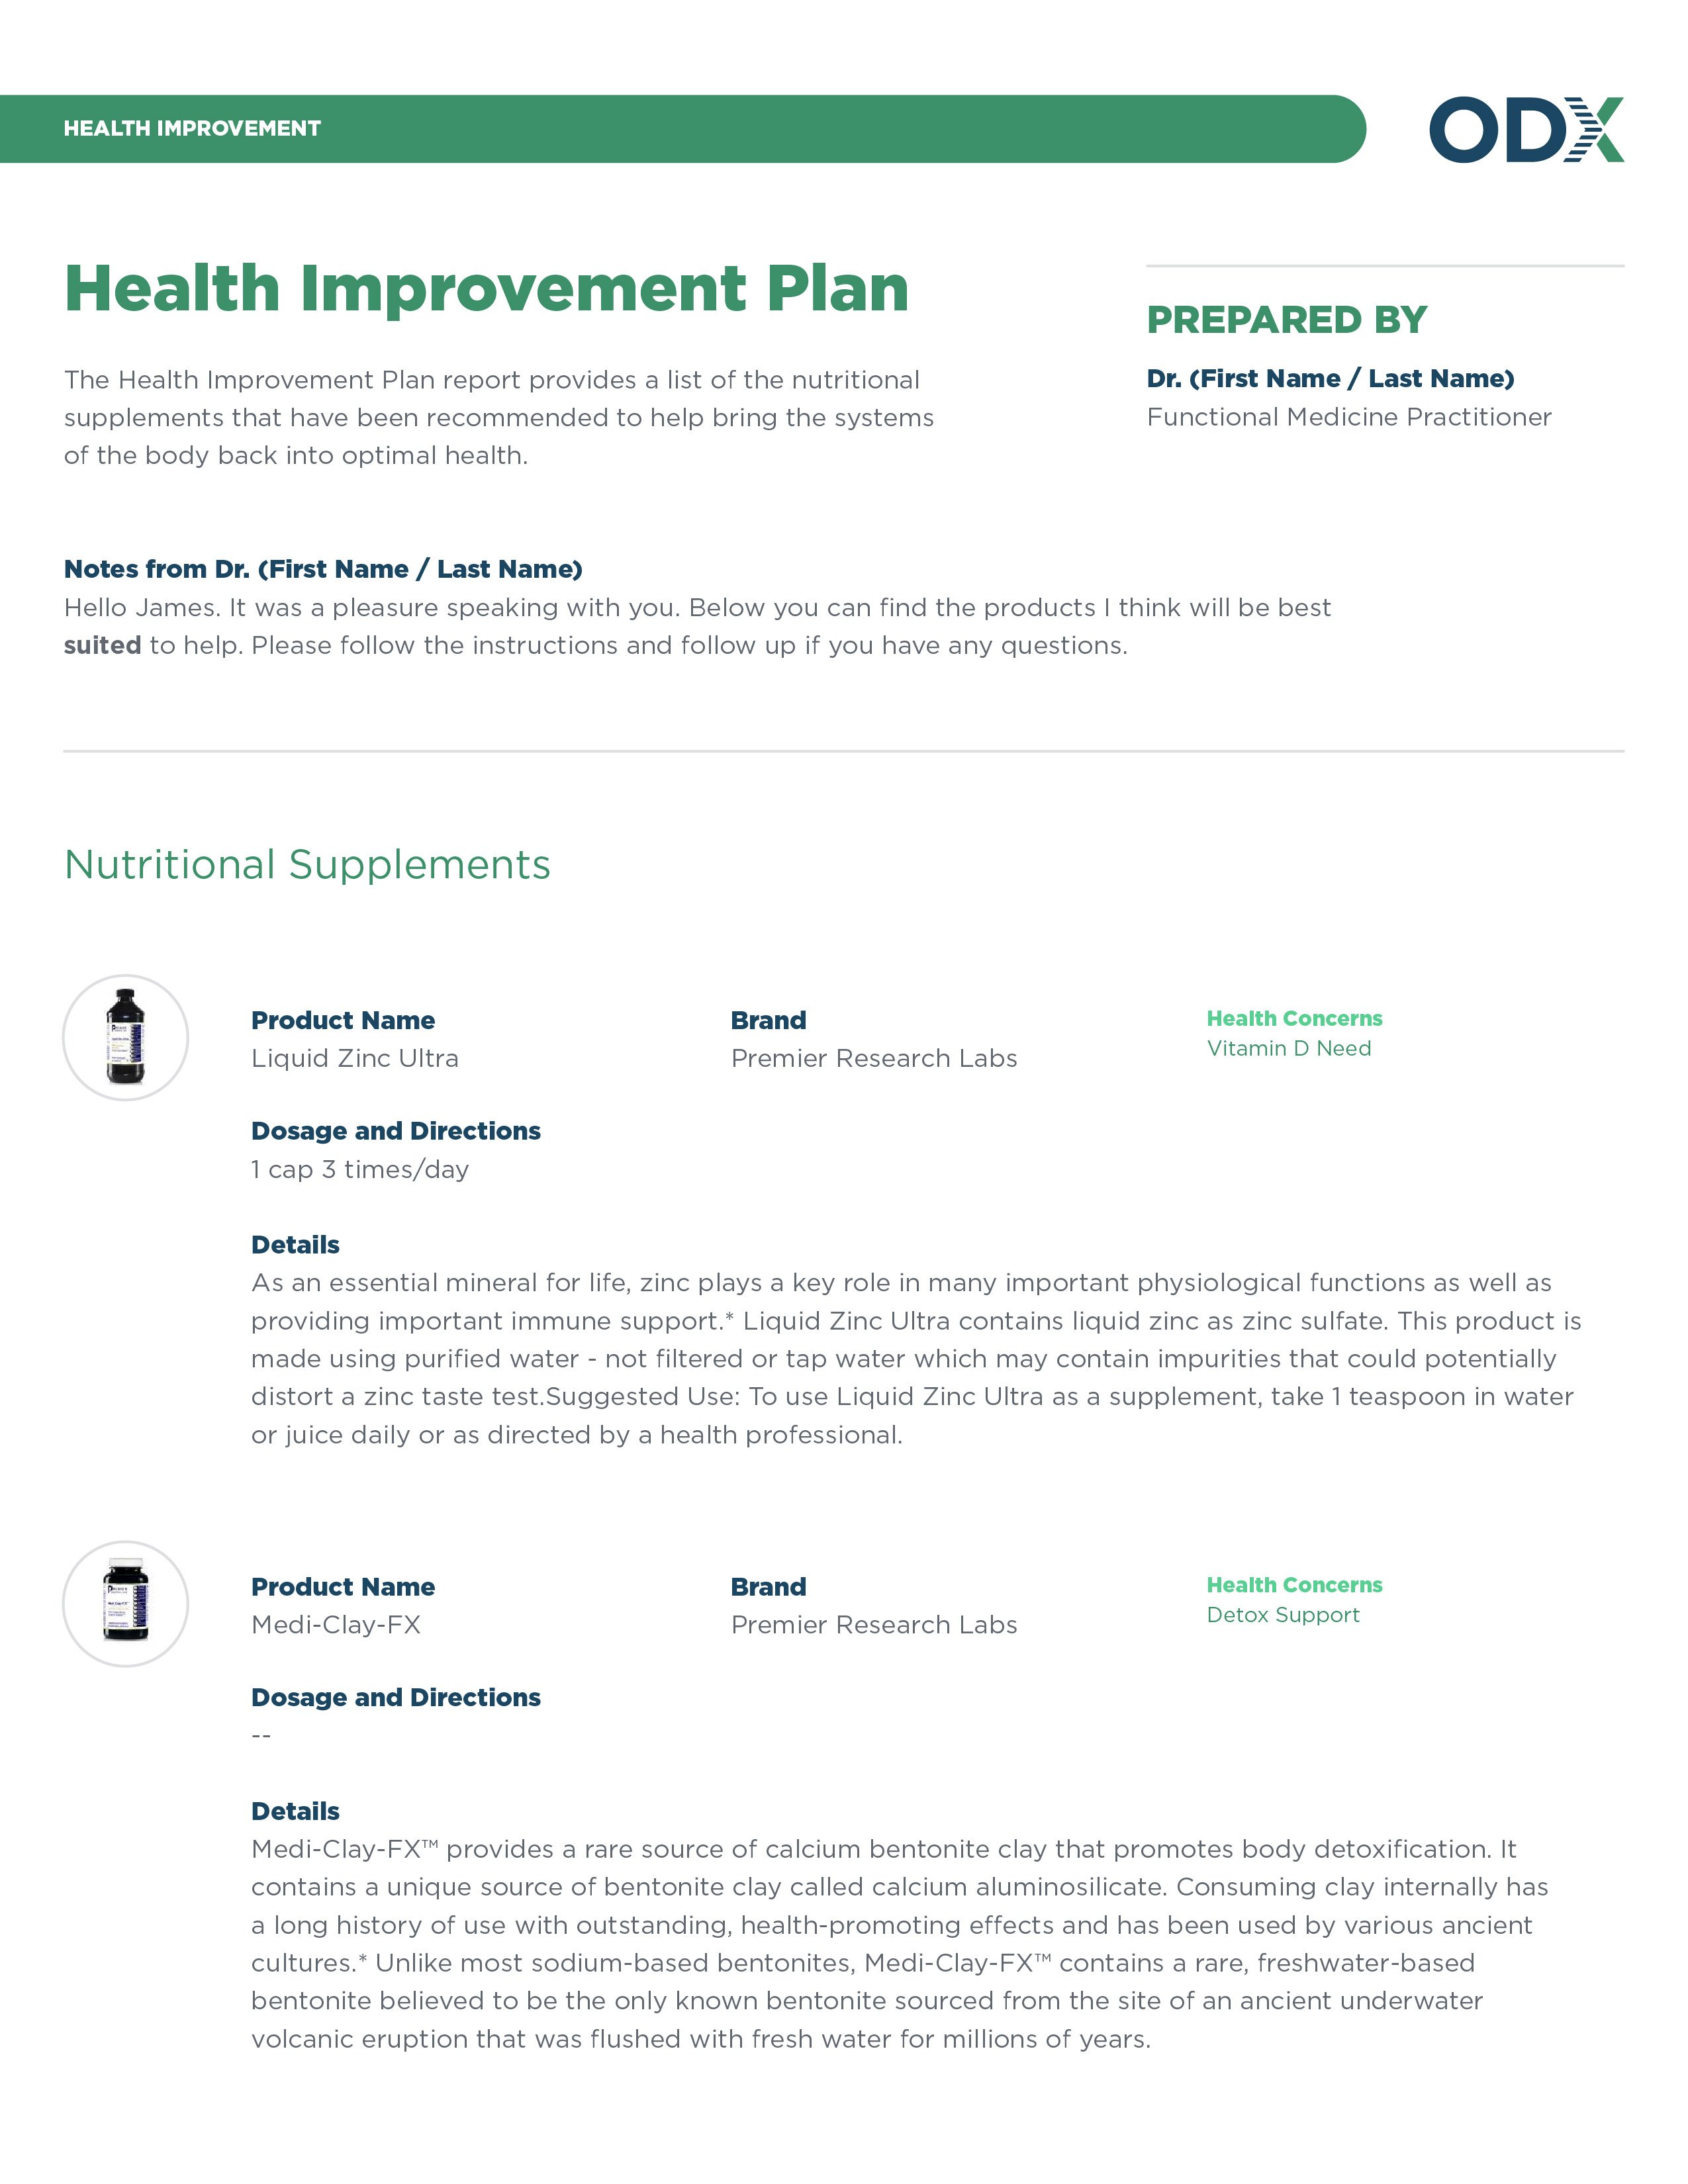 health_improvement_plan_ODX